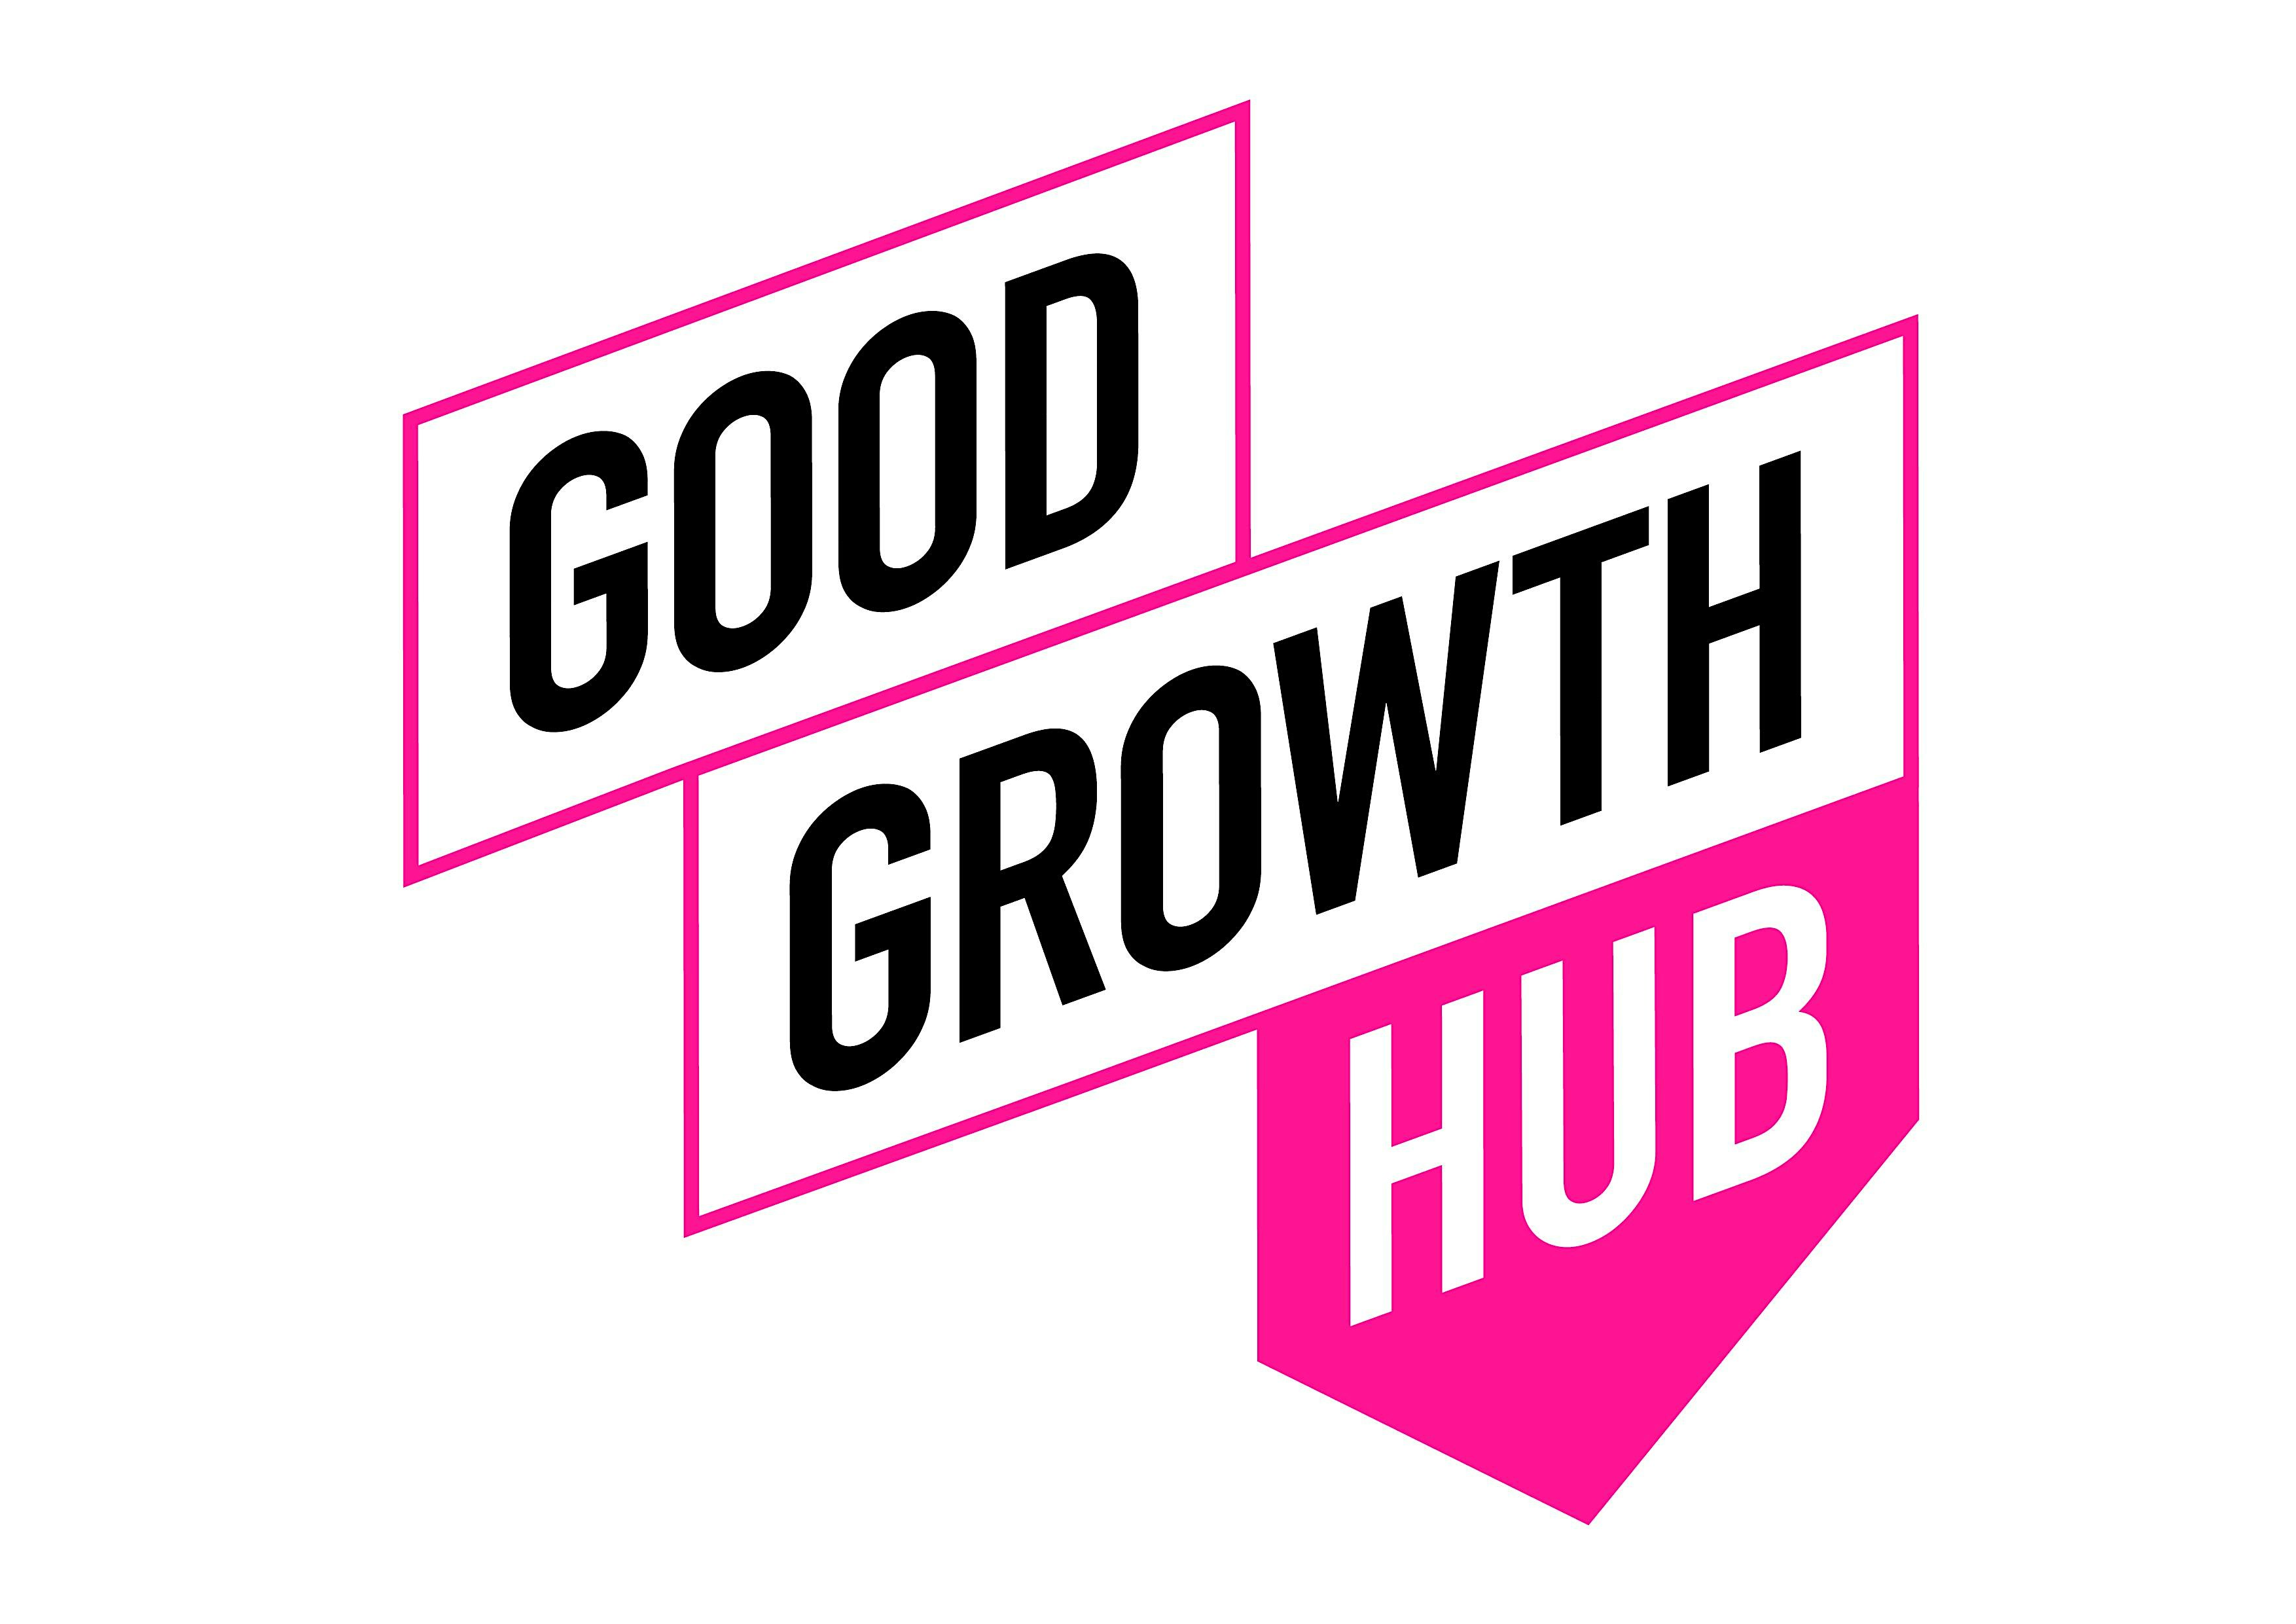 Good Growth Hub